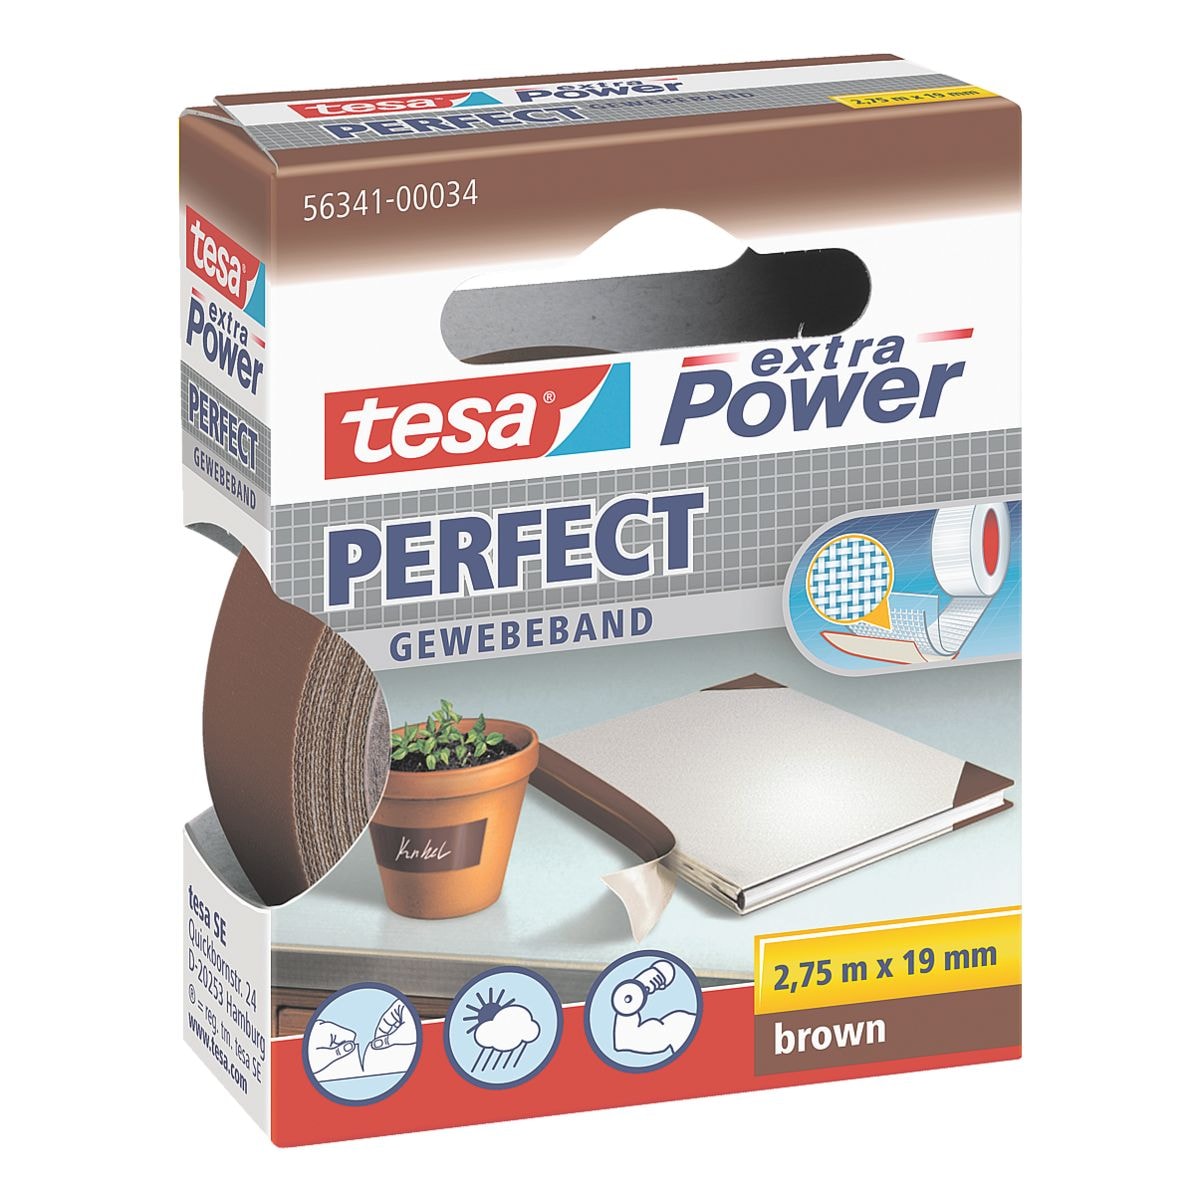 tesa Weefselband Extra Power 56341